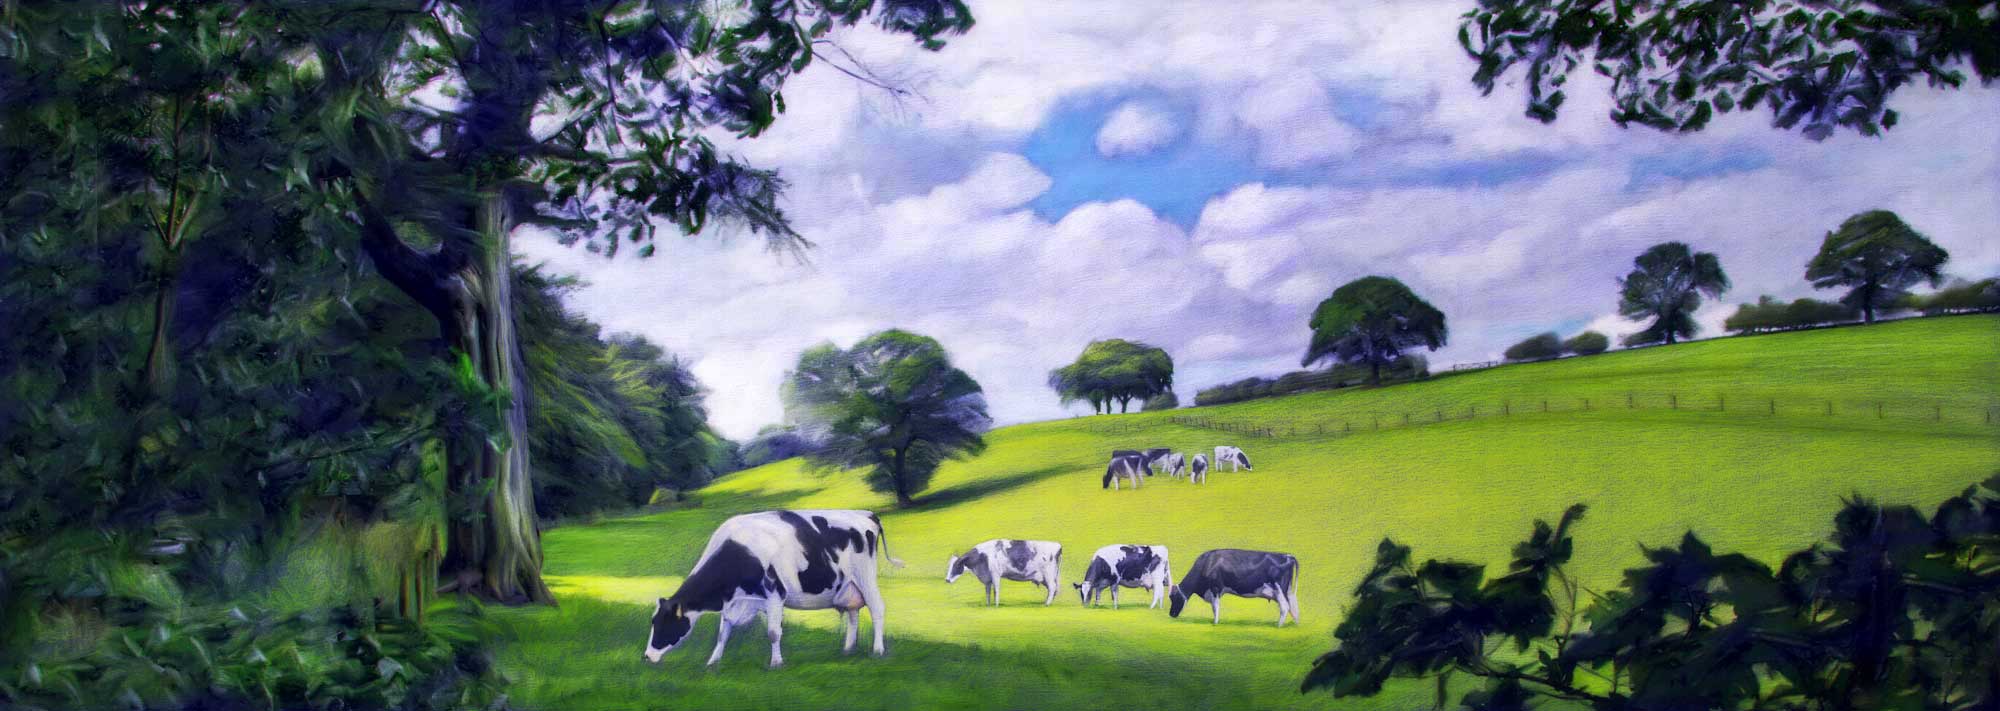 Grass Fed Cows